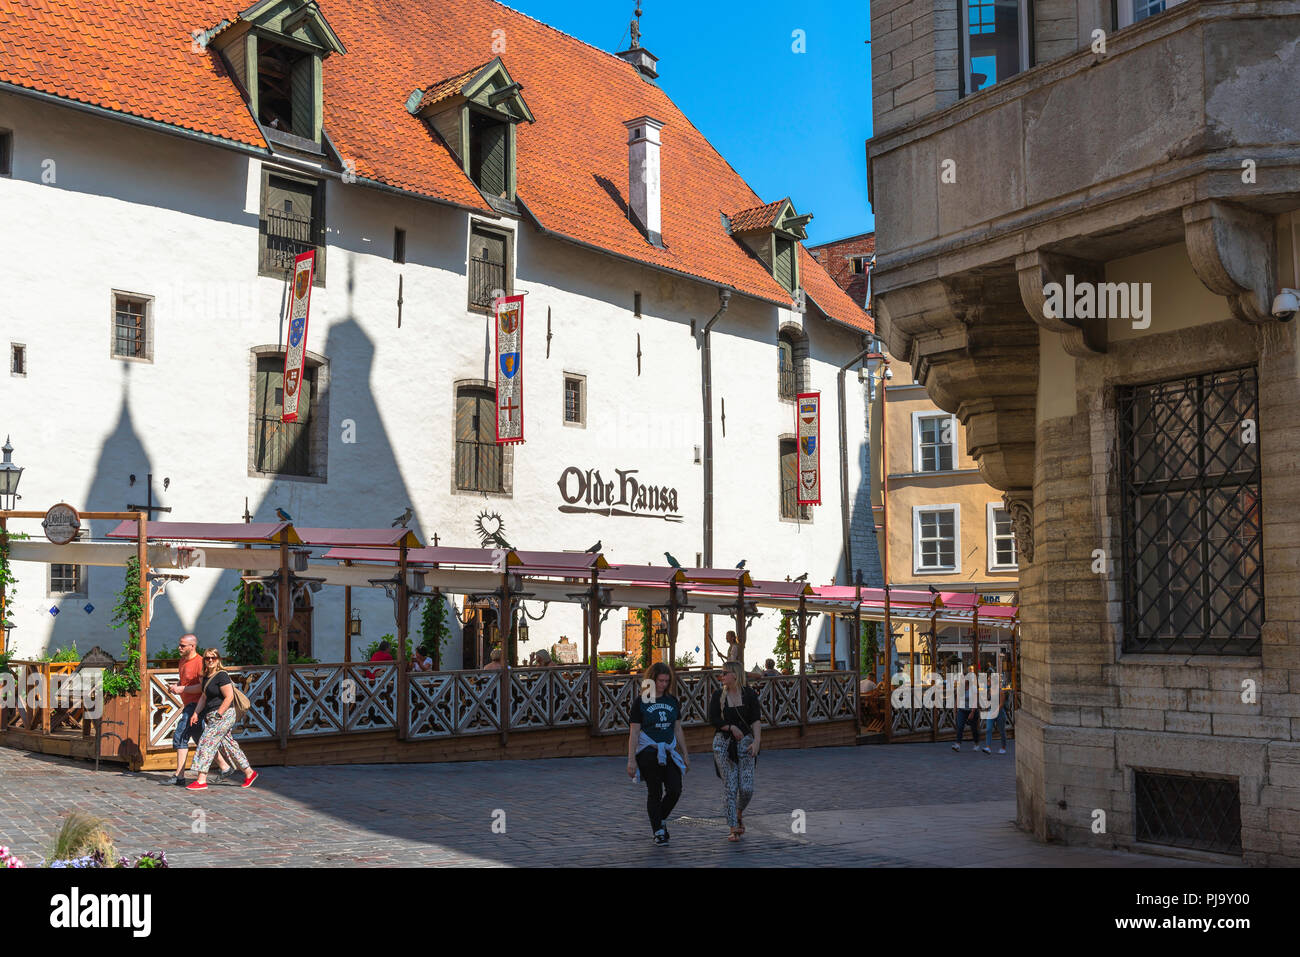 Olde Hansa Restaurant, view of the famous Olde Hansa restaurant tavern in the center of the Old Town quarter of Tallinn, Estonia. Stock Photo